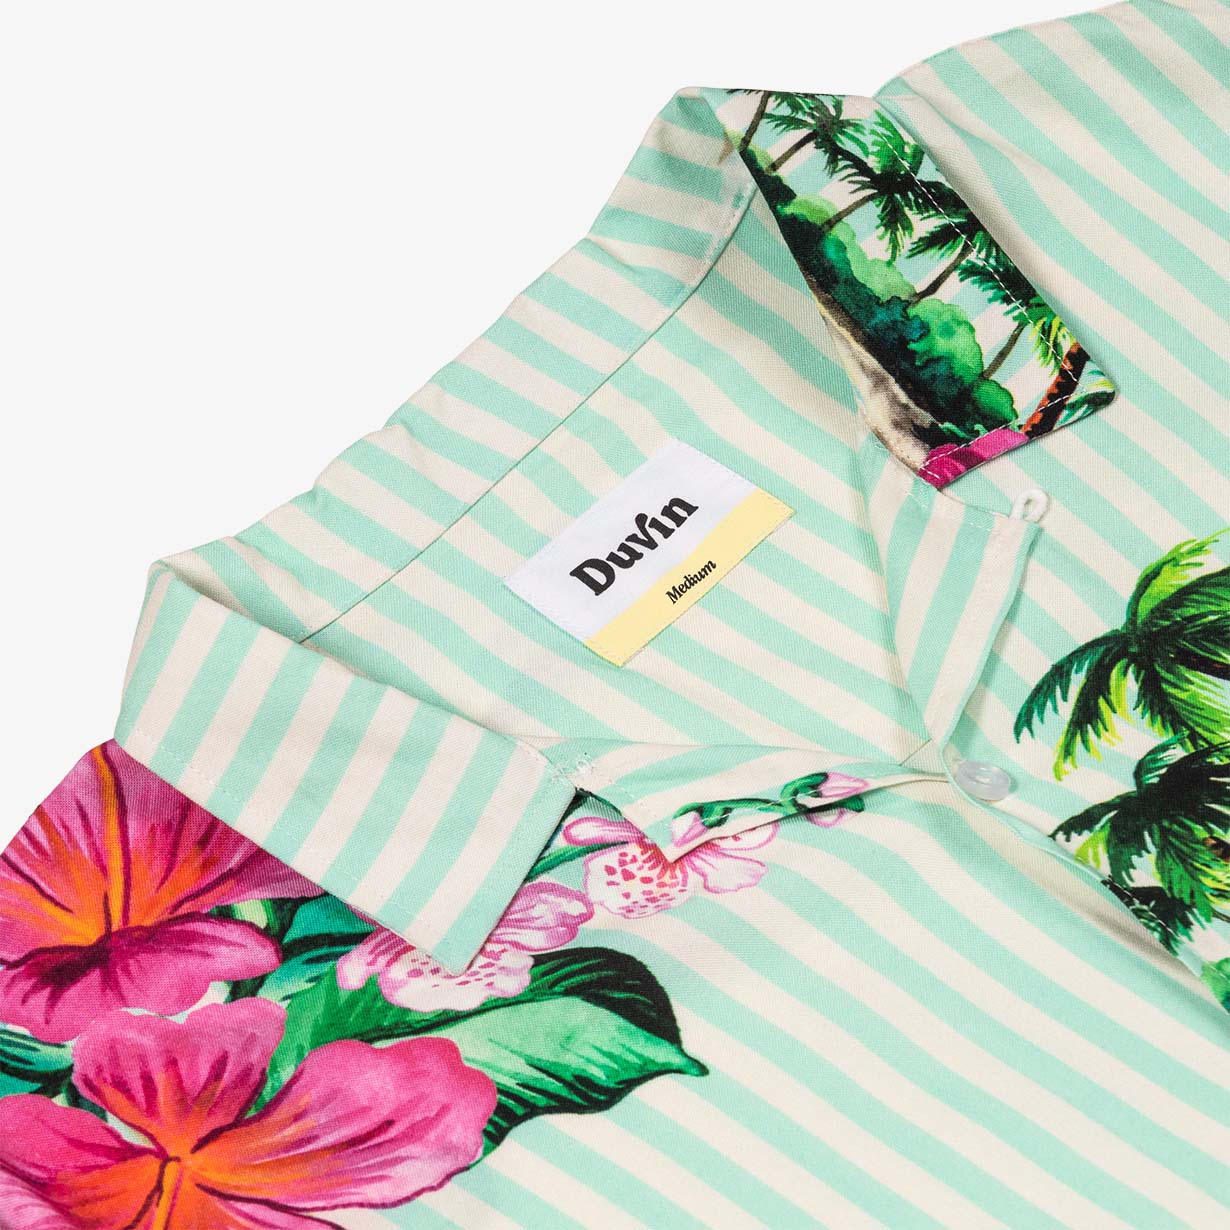 Pinstripes Floral Buttonup Shirt